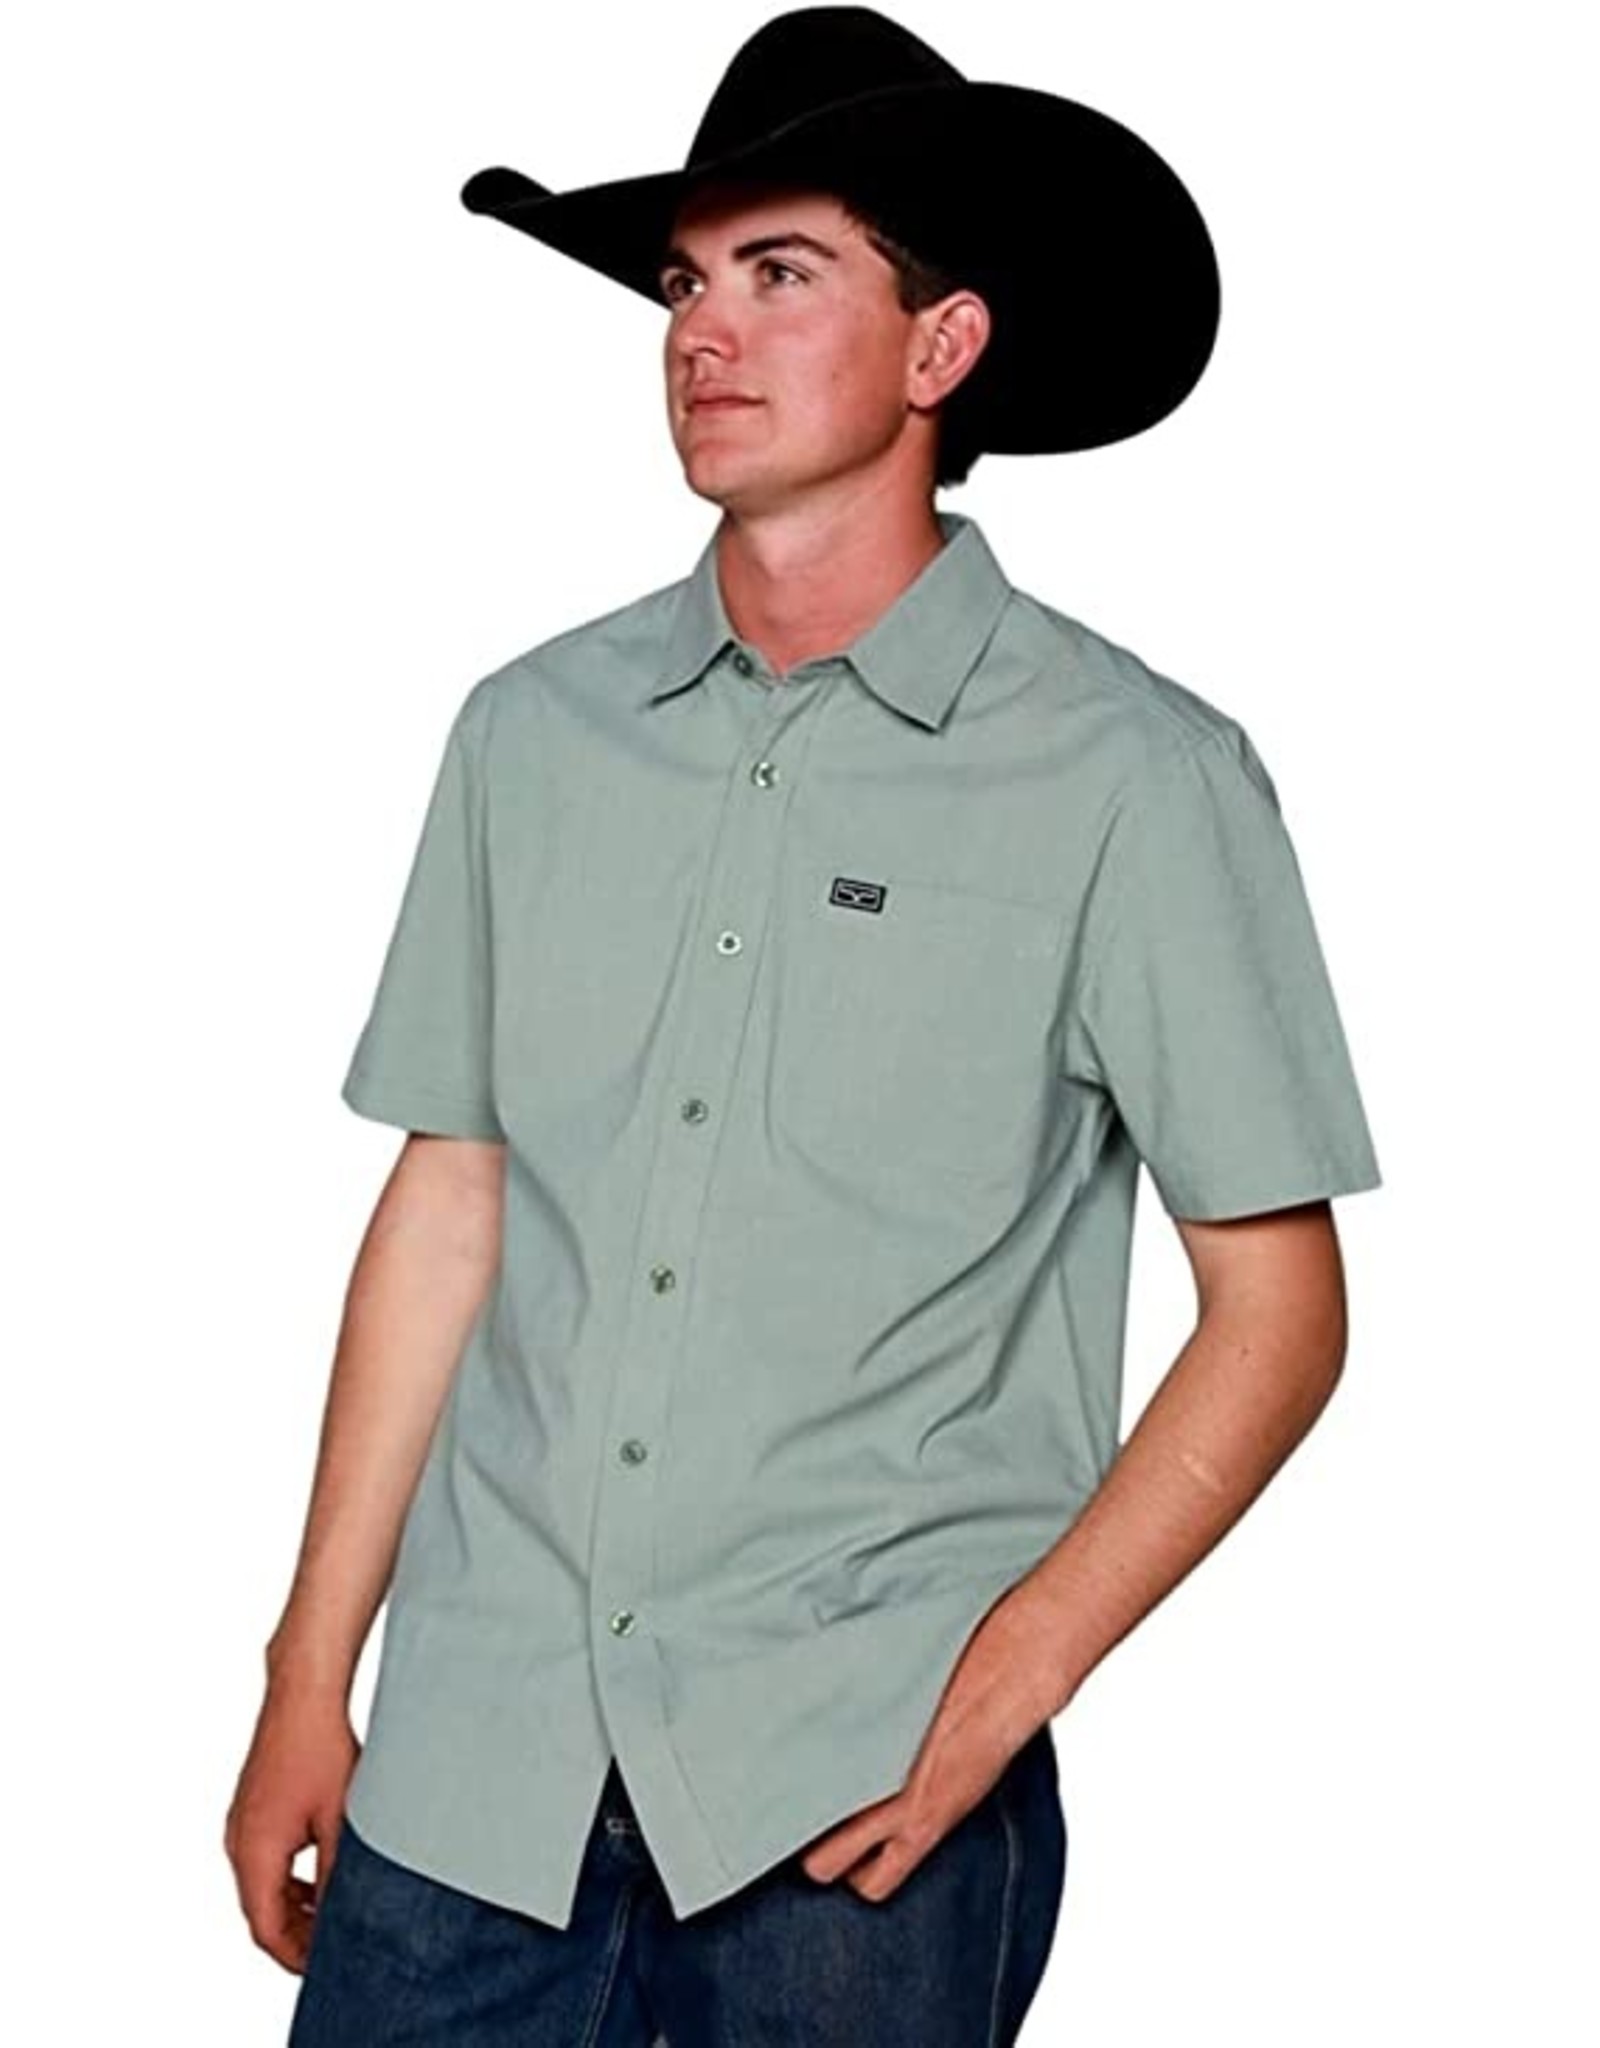 Kimes Ranch Kimes Ranch Linville Short Sleeve Solid Dress Shirt Sage